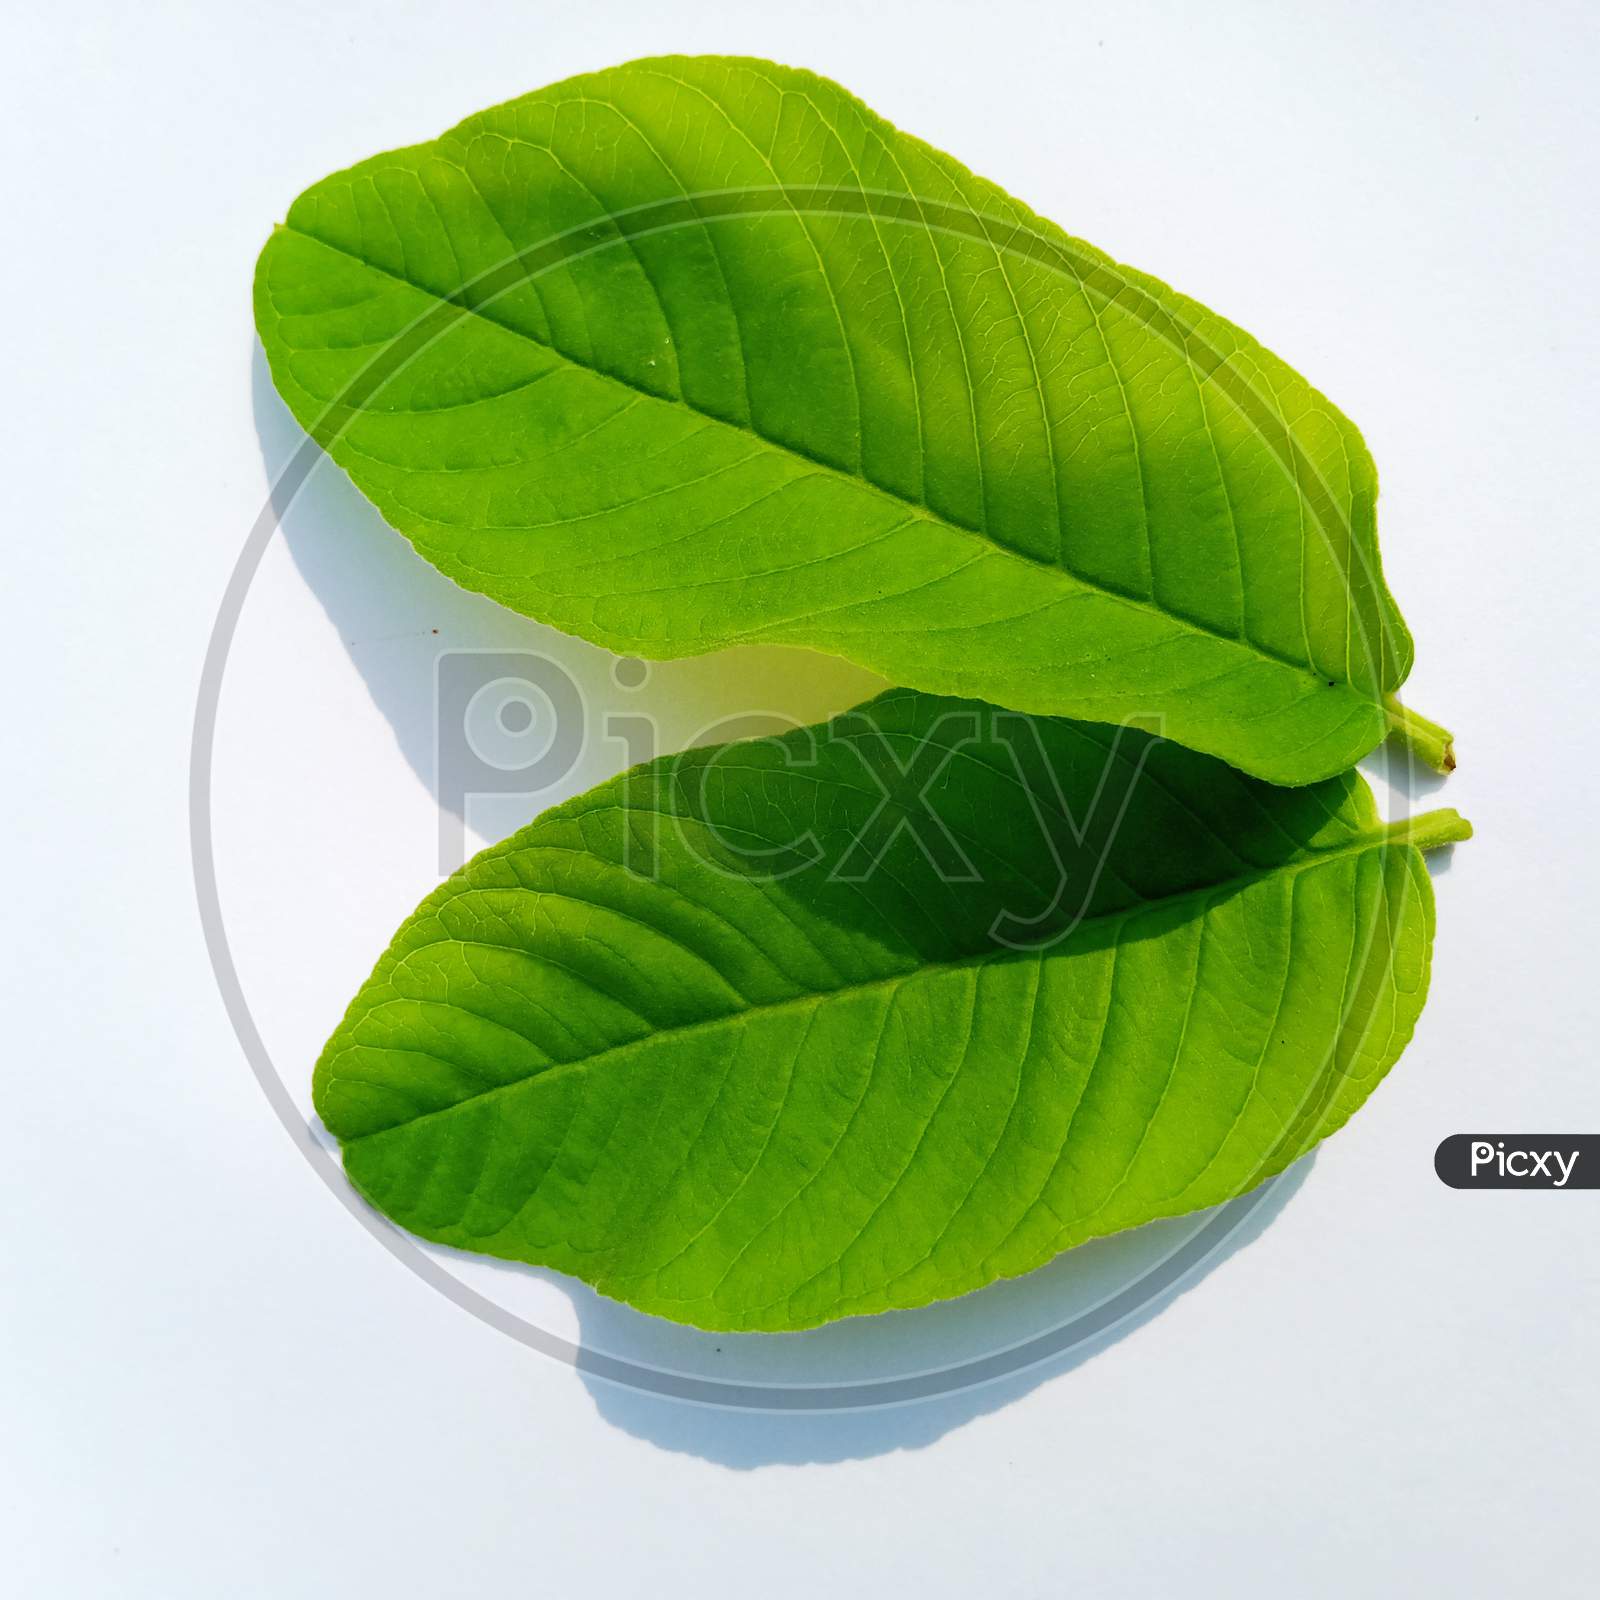 Guava leaf, Green guava leaf on white background